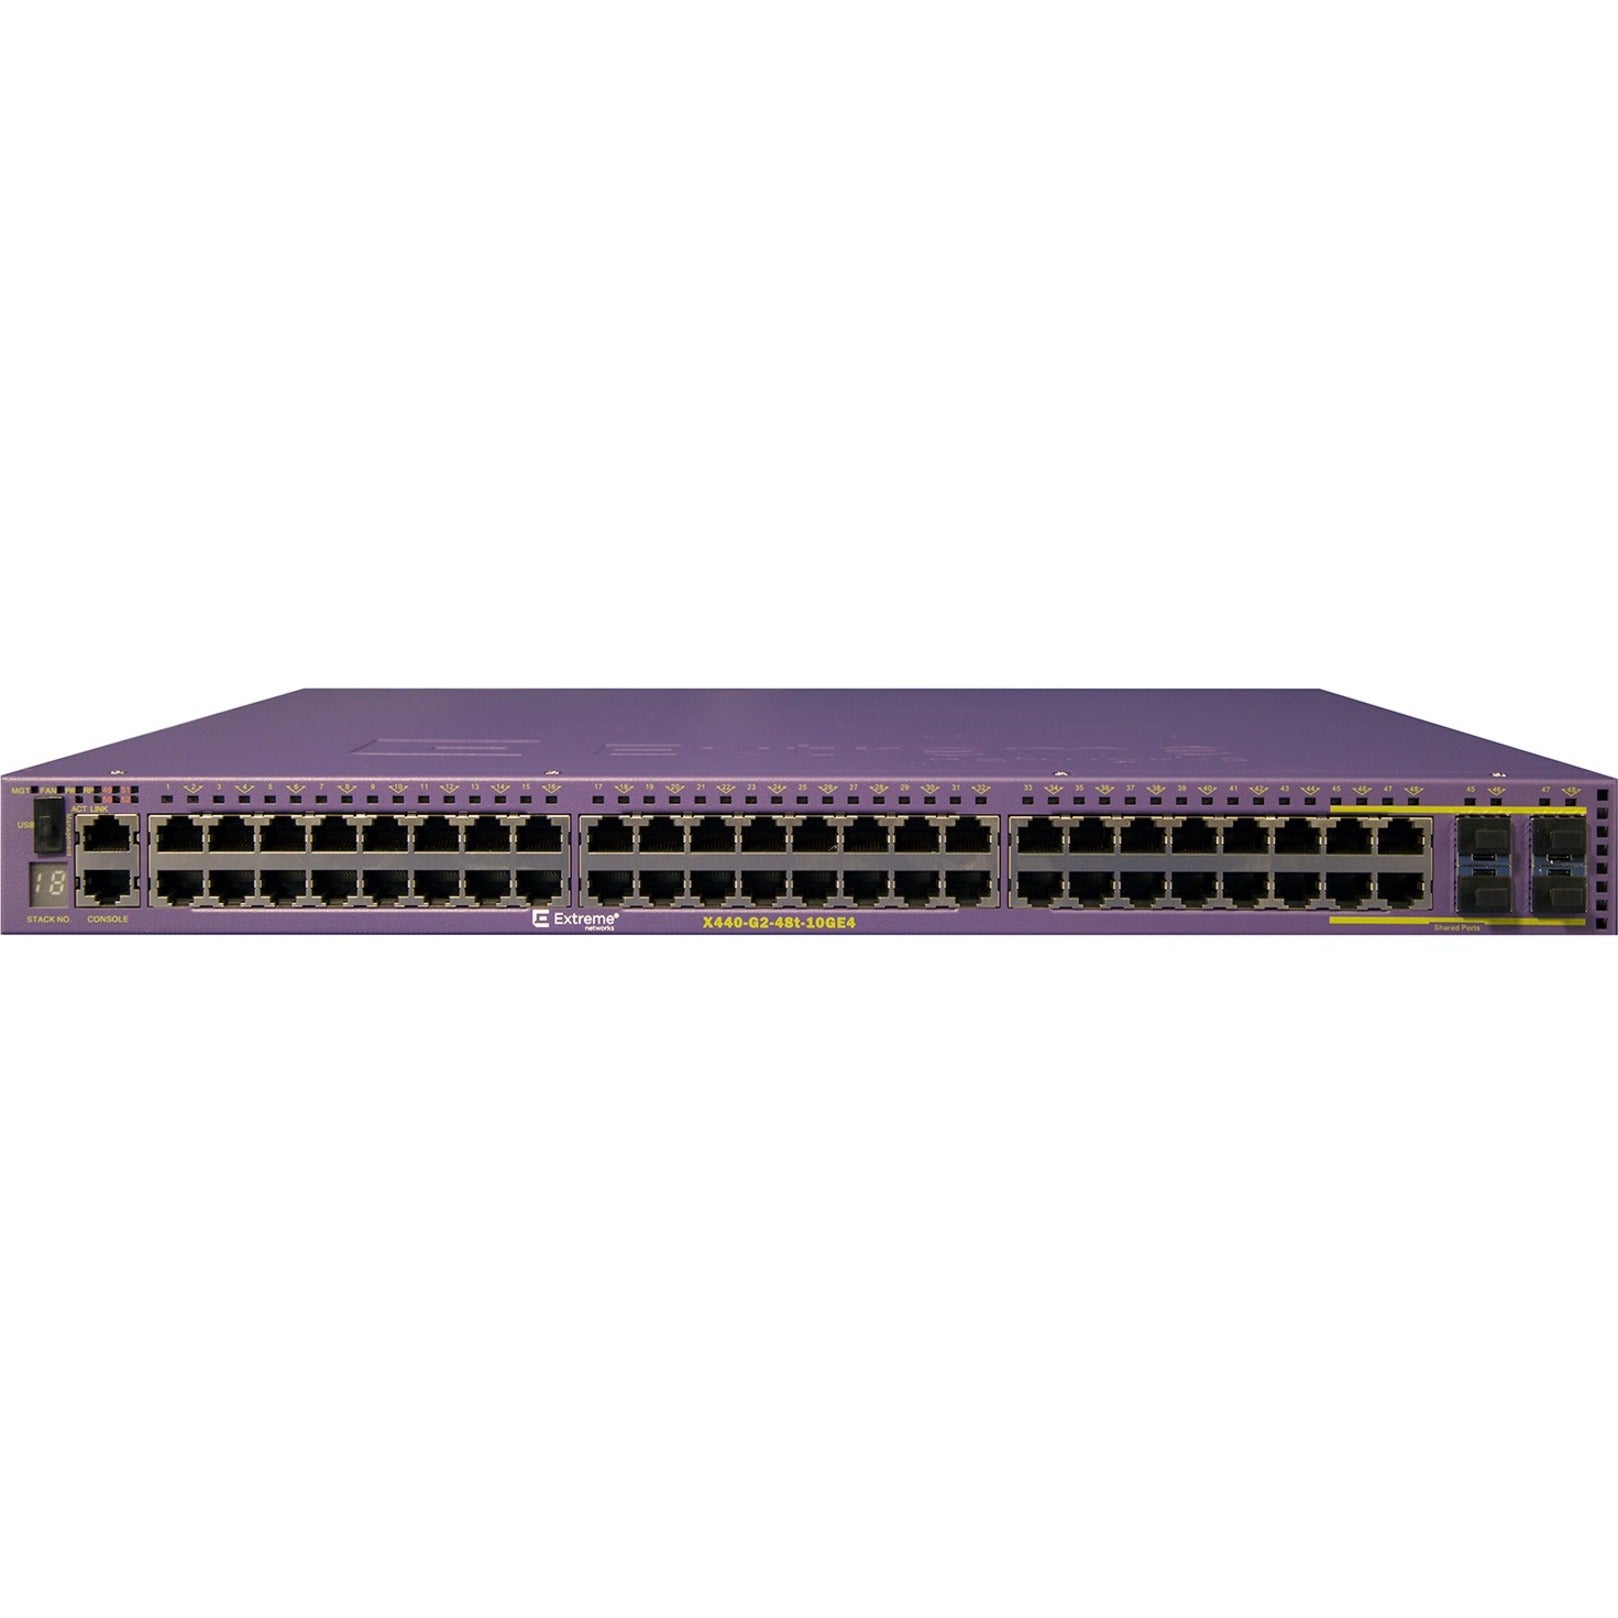 Extreme Networks 16534 X440-G2-48t-10GE4 Ethernet Switch, Gigabit Ethernet, 48 Network Ports